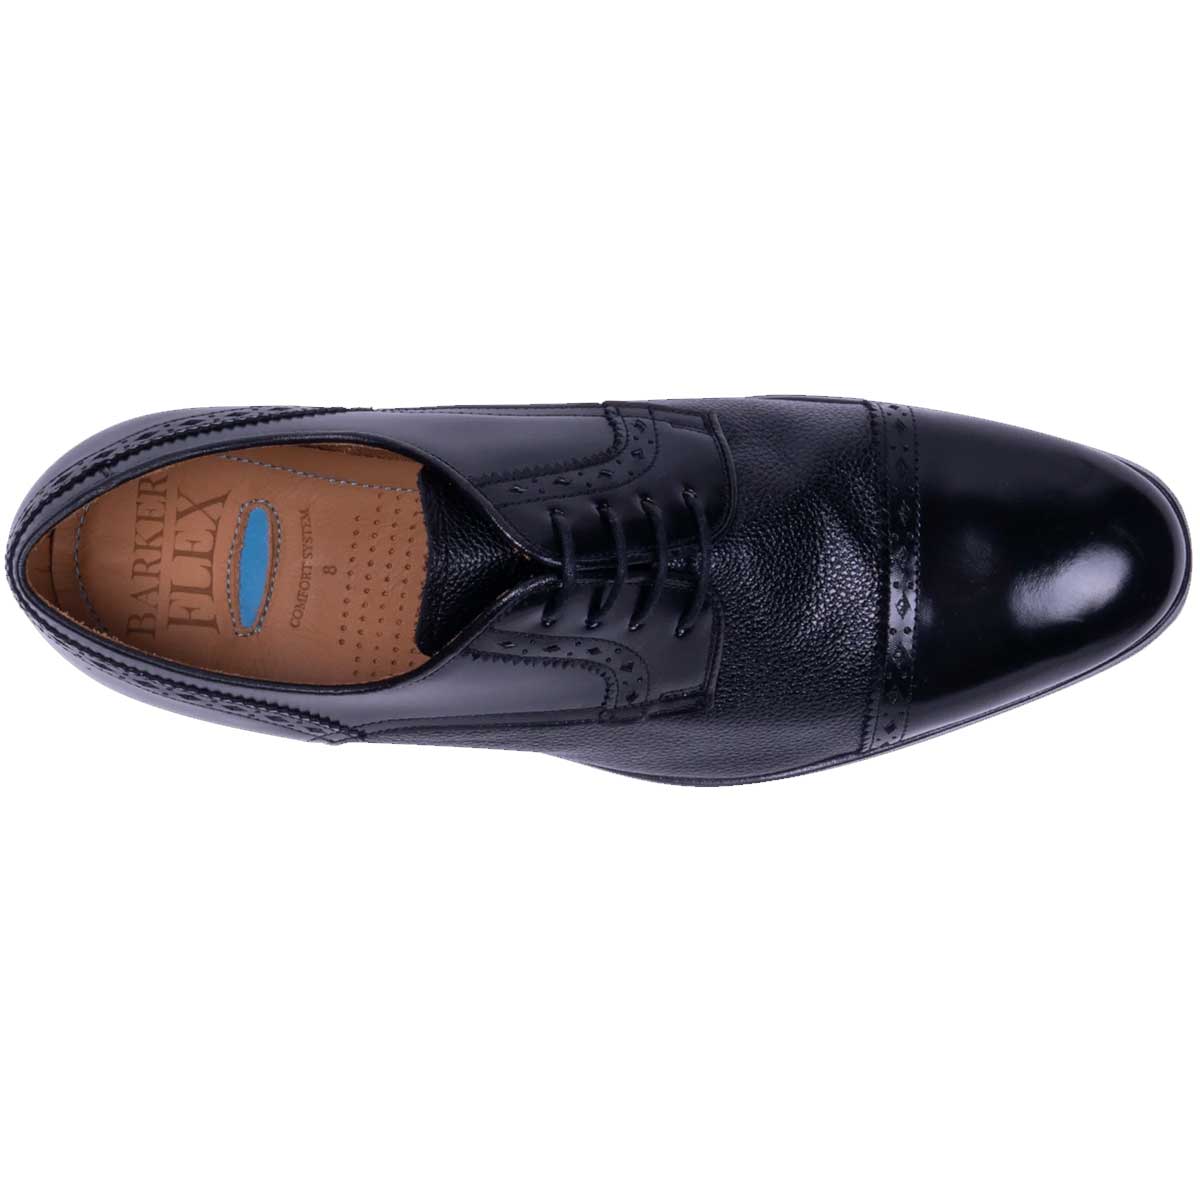 BARKER Ashbourne Shoes - Mens - Black Hi-Shine/Grain